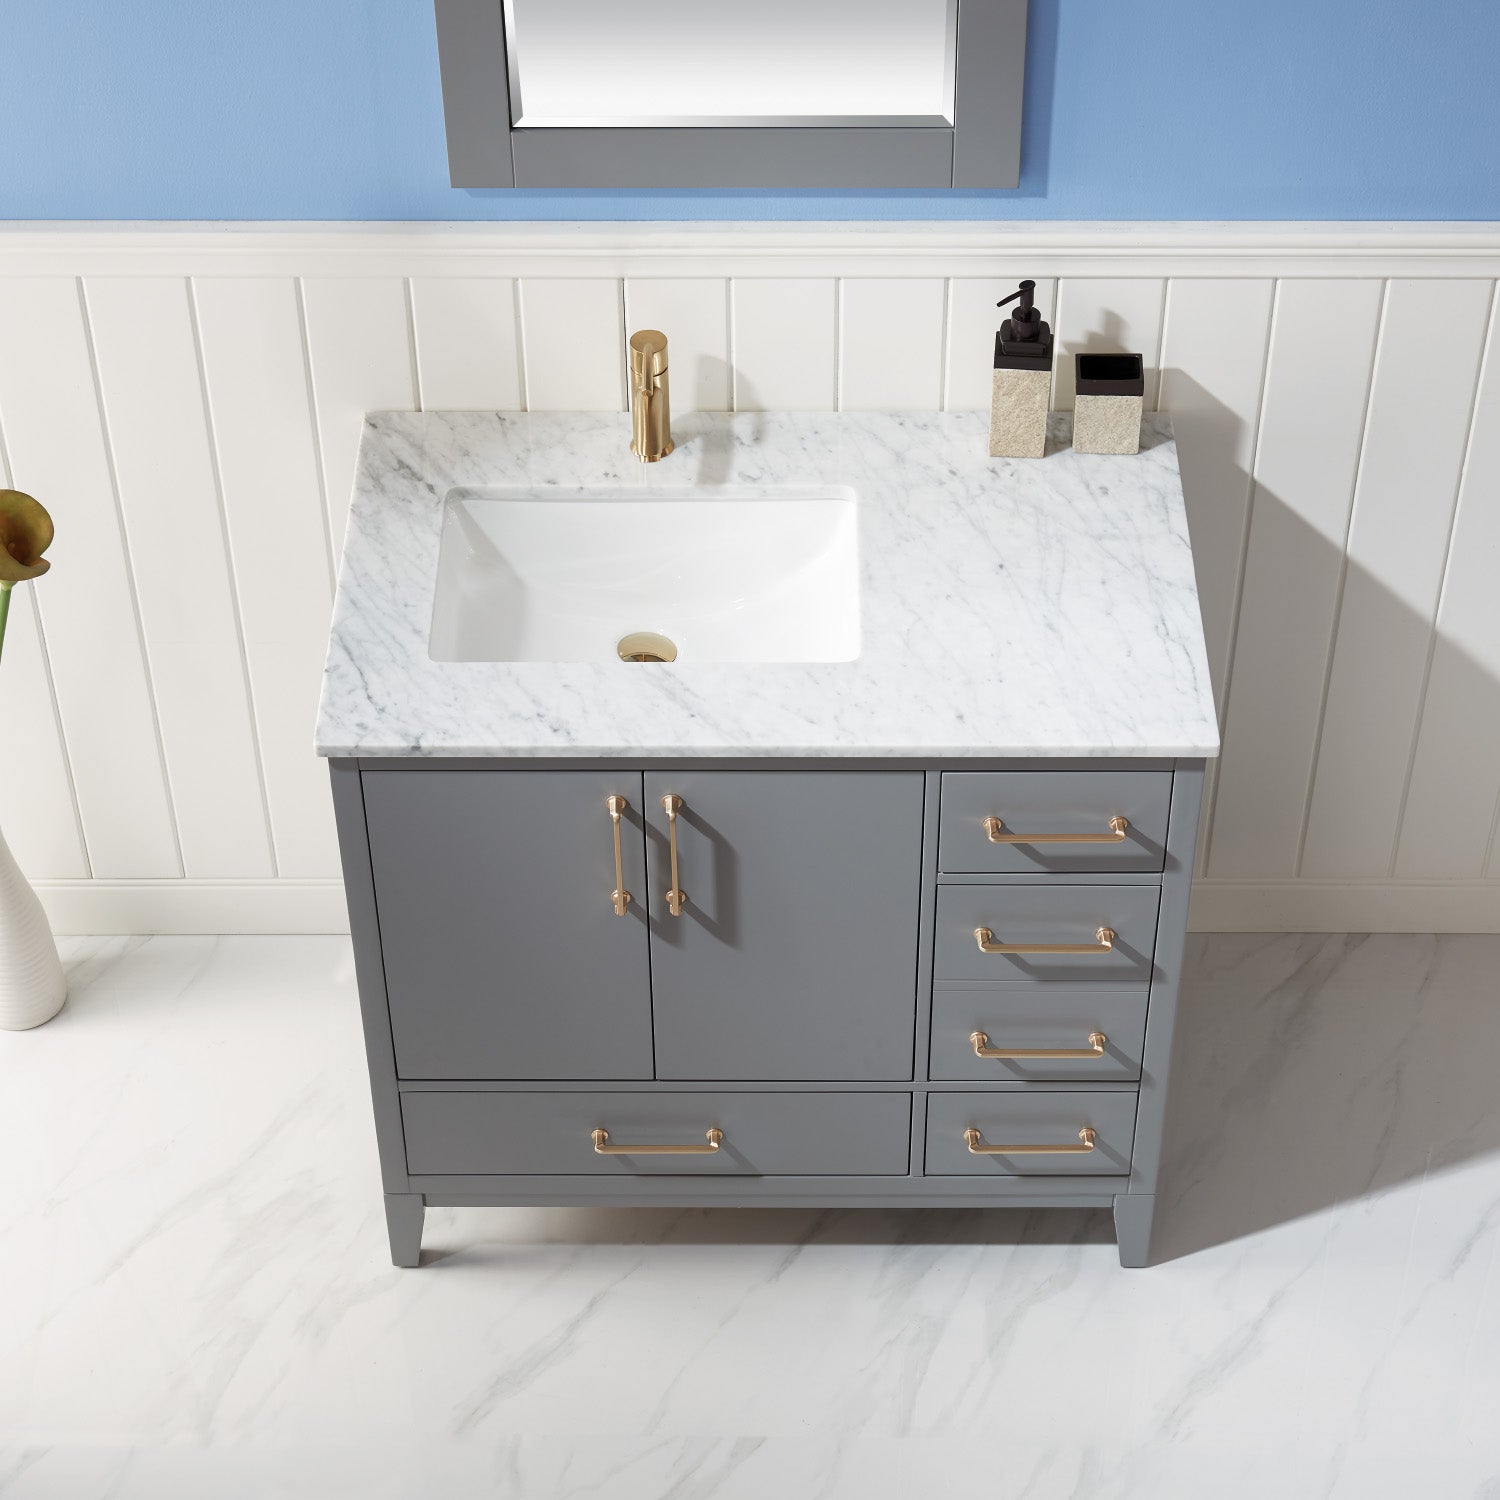 Sutton 36" Single Bathroom Vanity Set with Marble Countertop